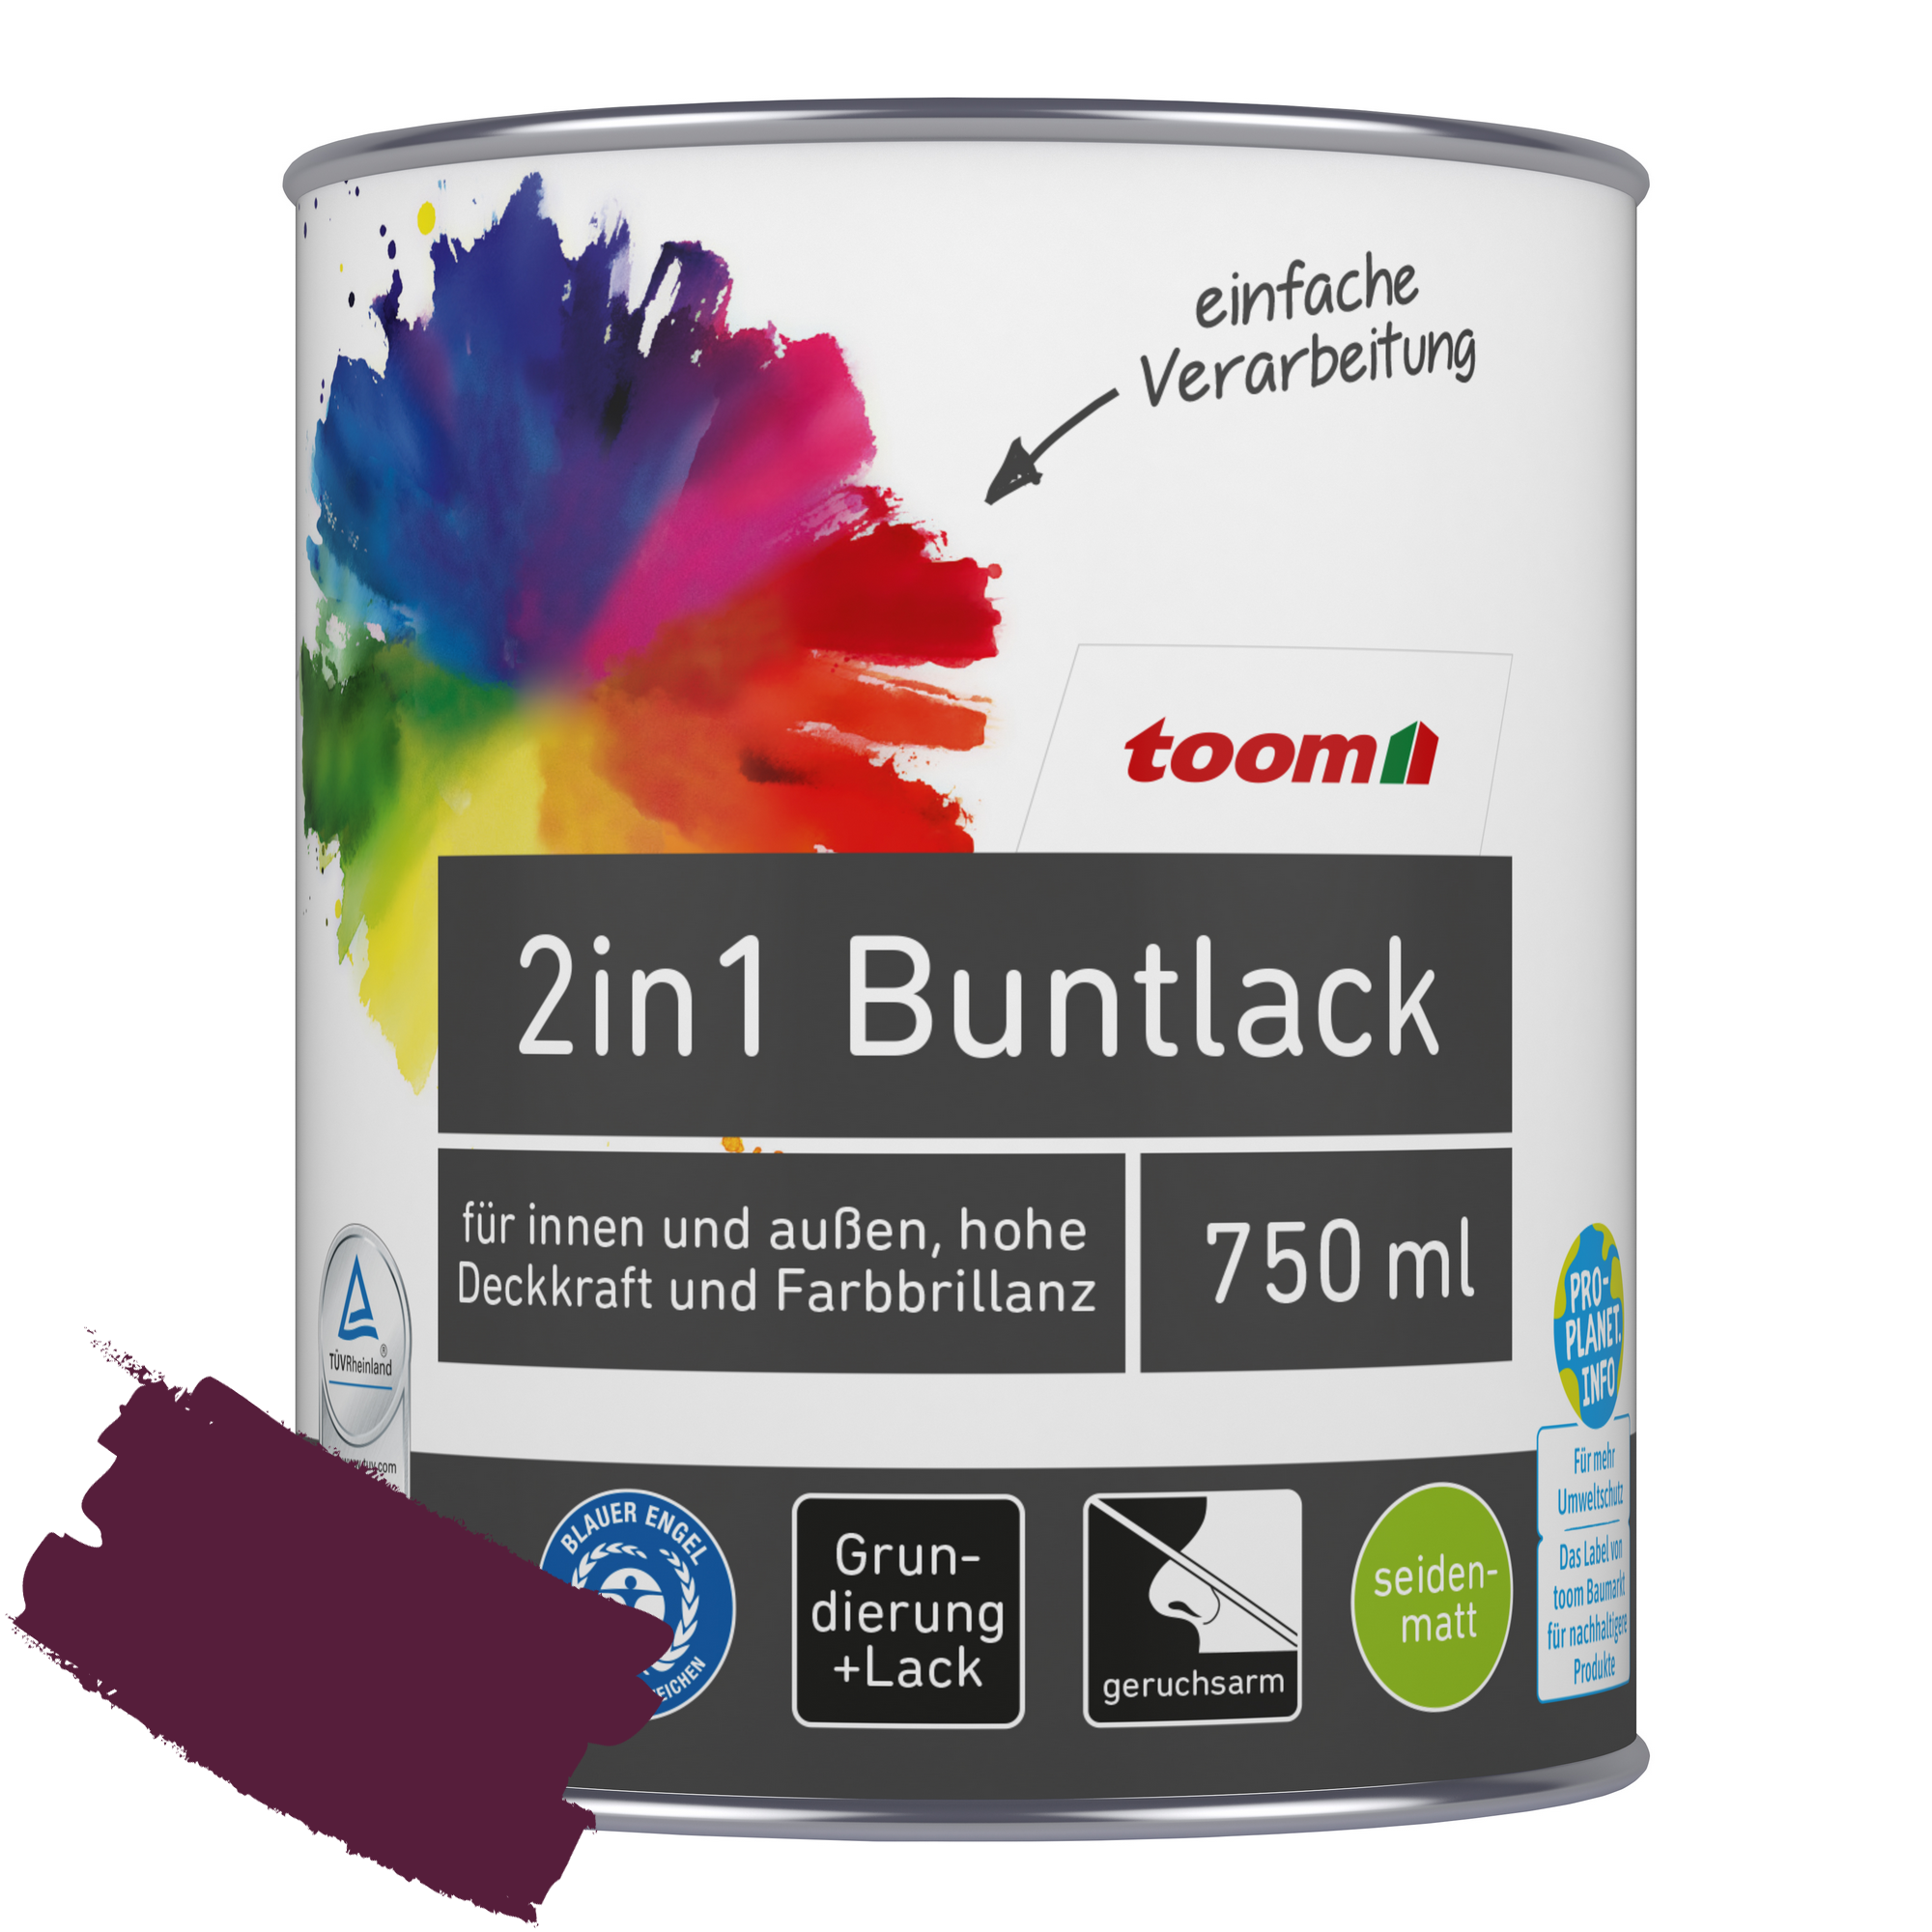 2in1 Buntlack merlotfarben seidenmatt 750 ml + product picture